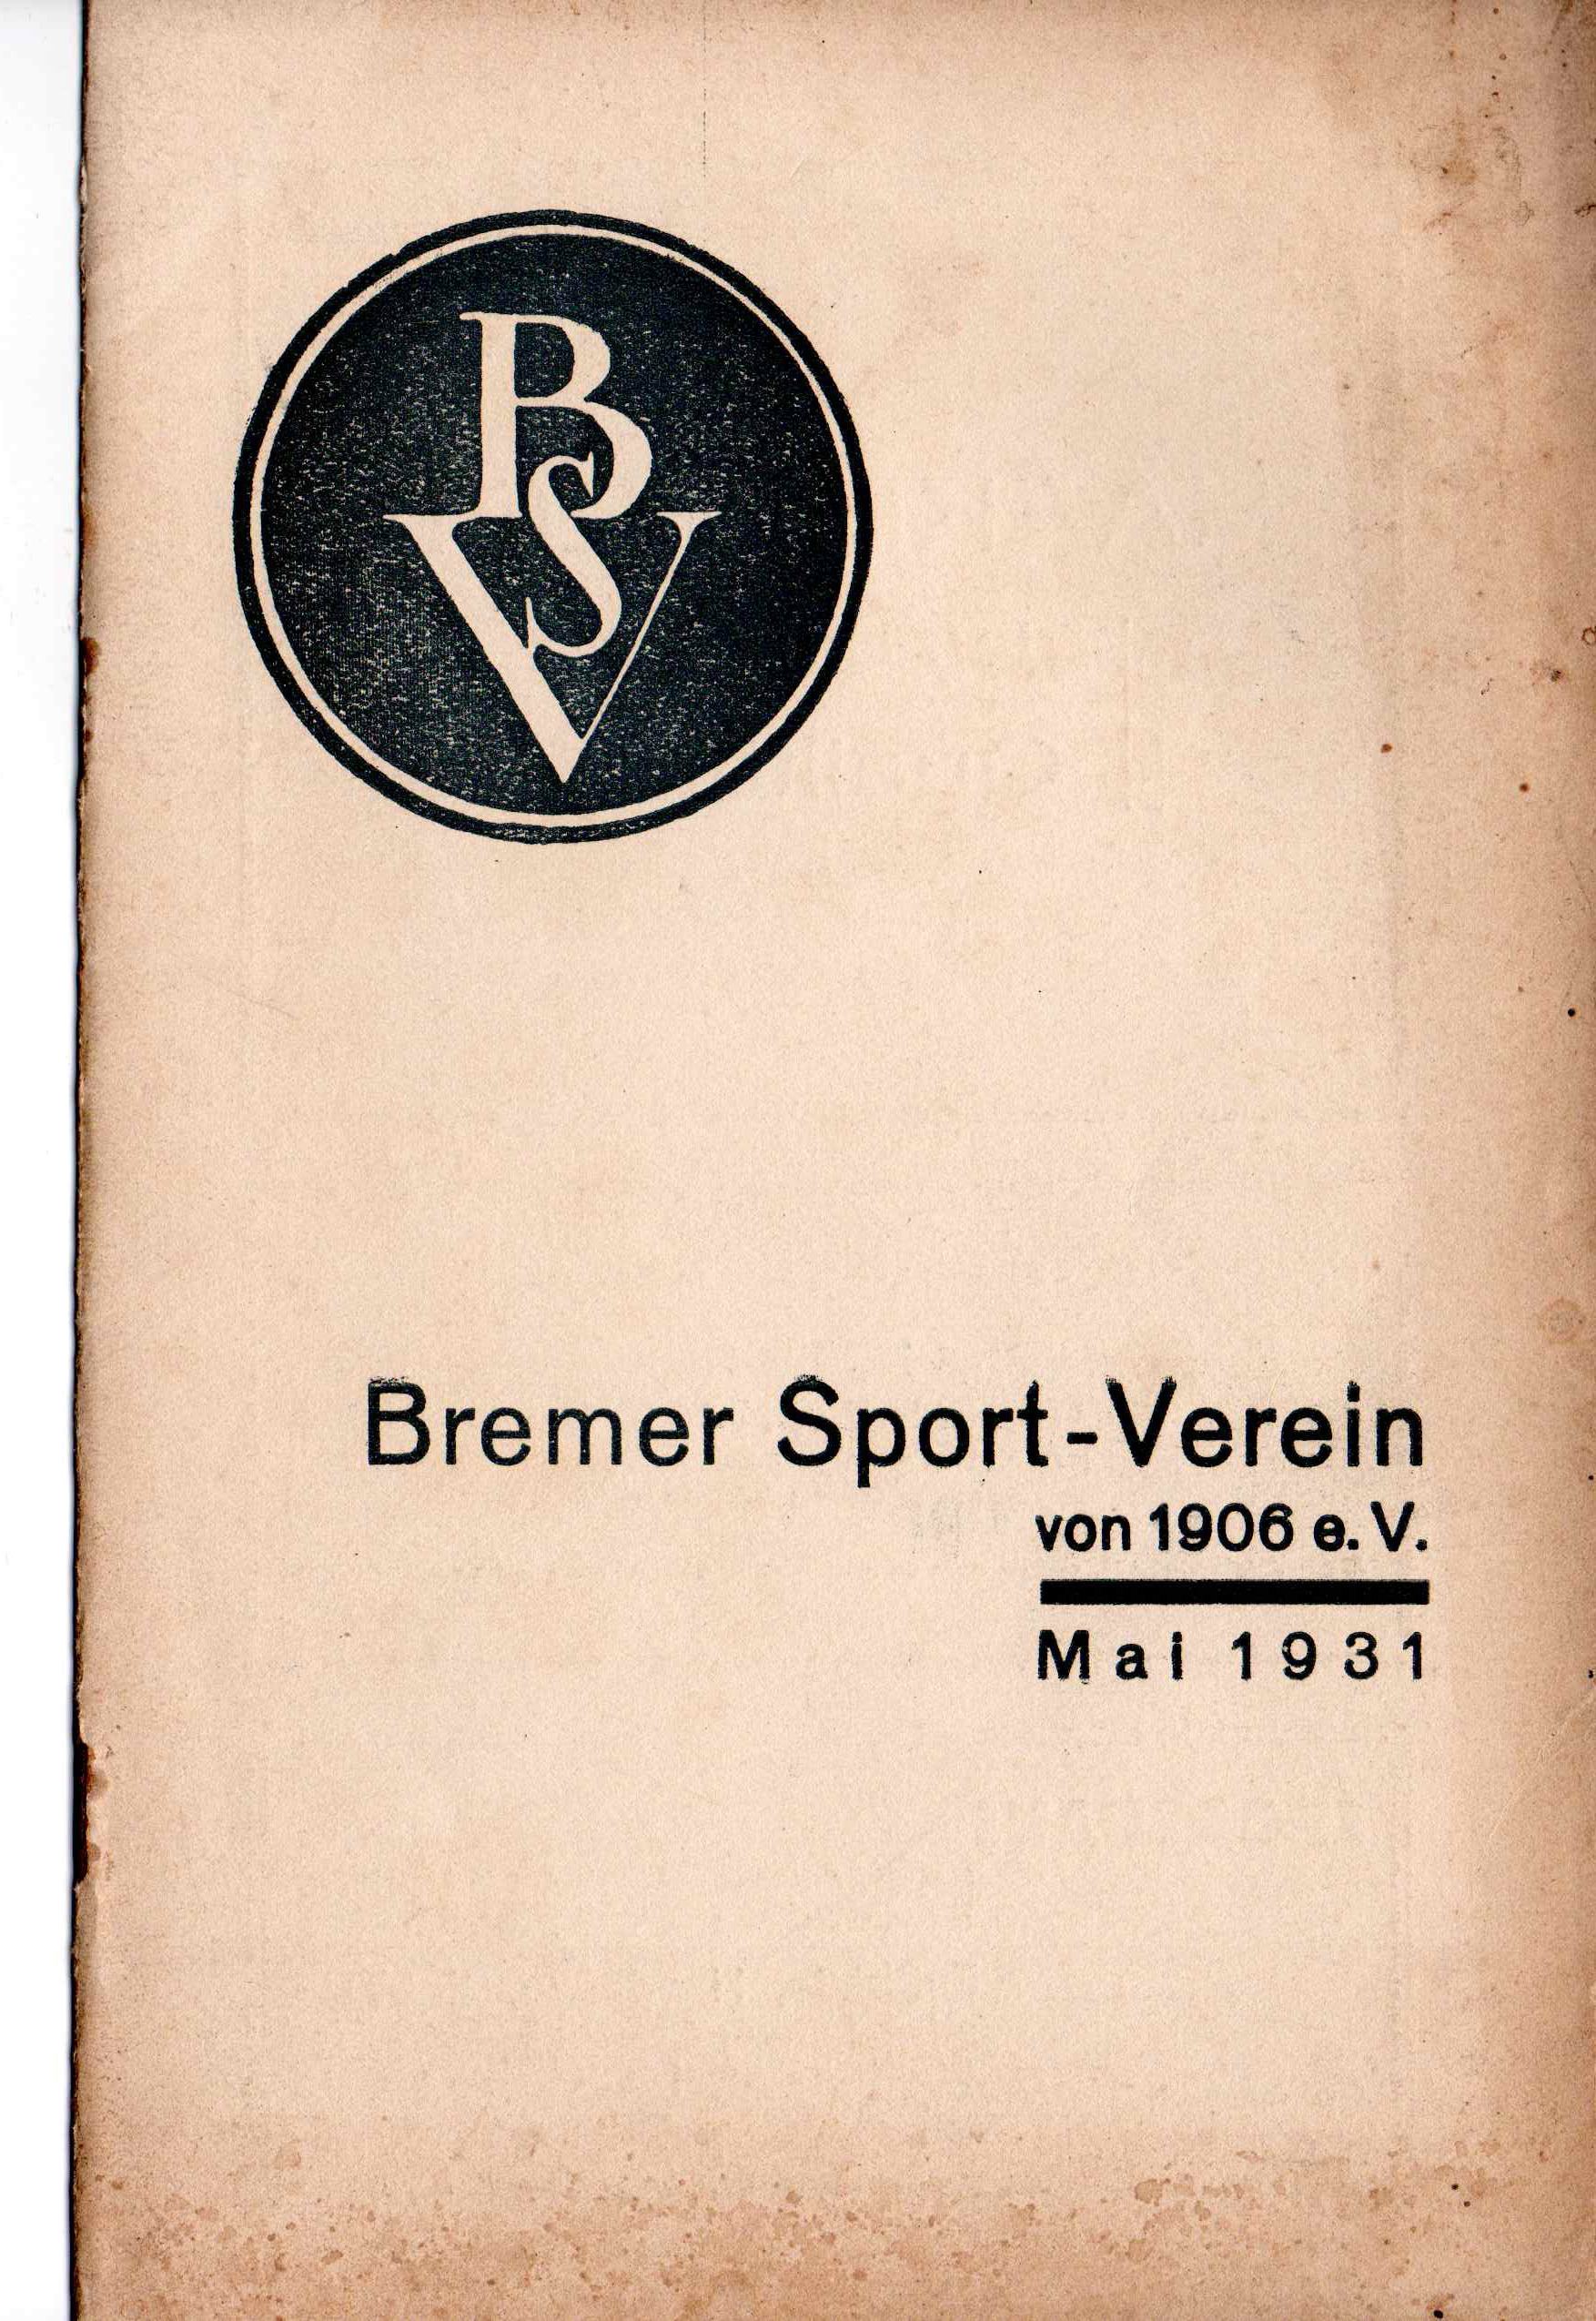 Vereinszeitung Mai 1931